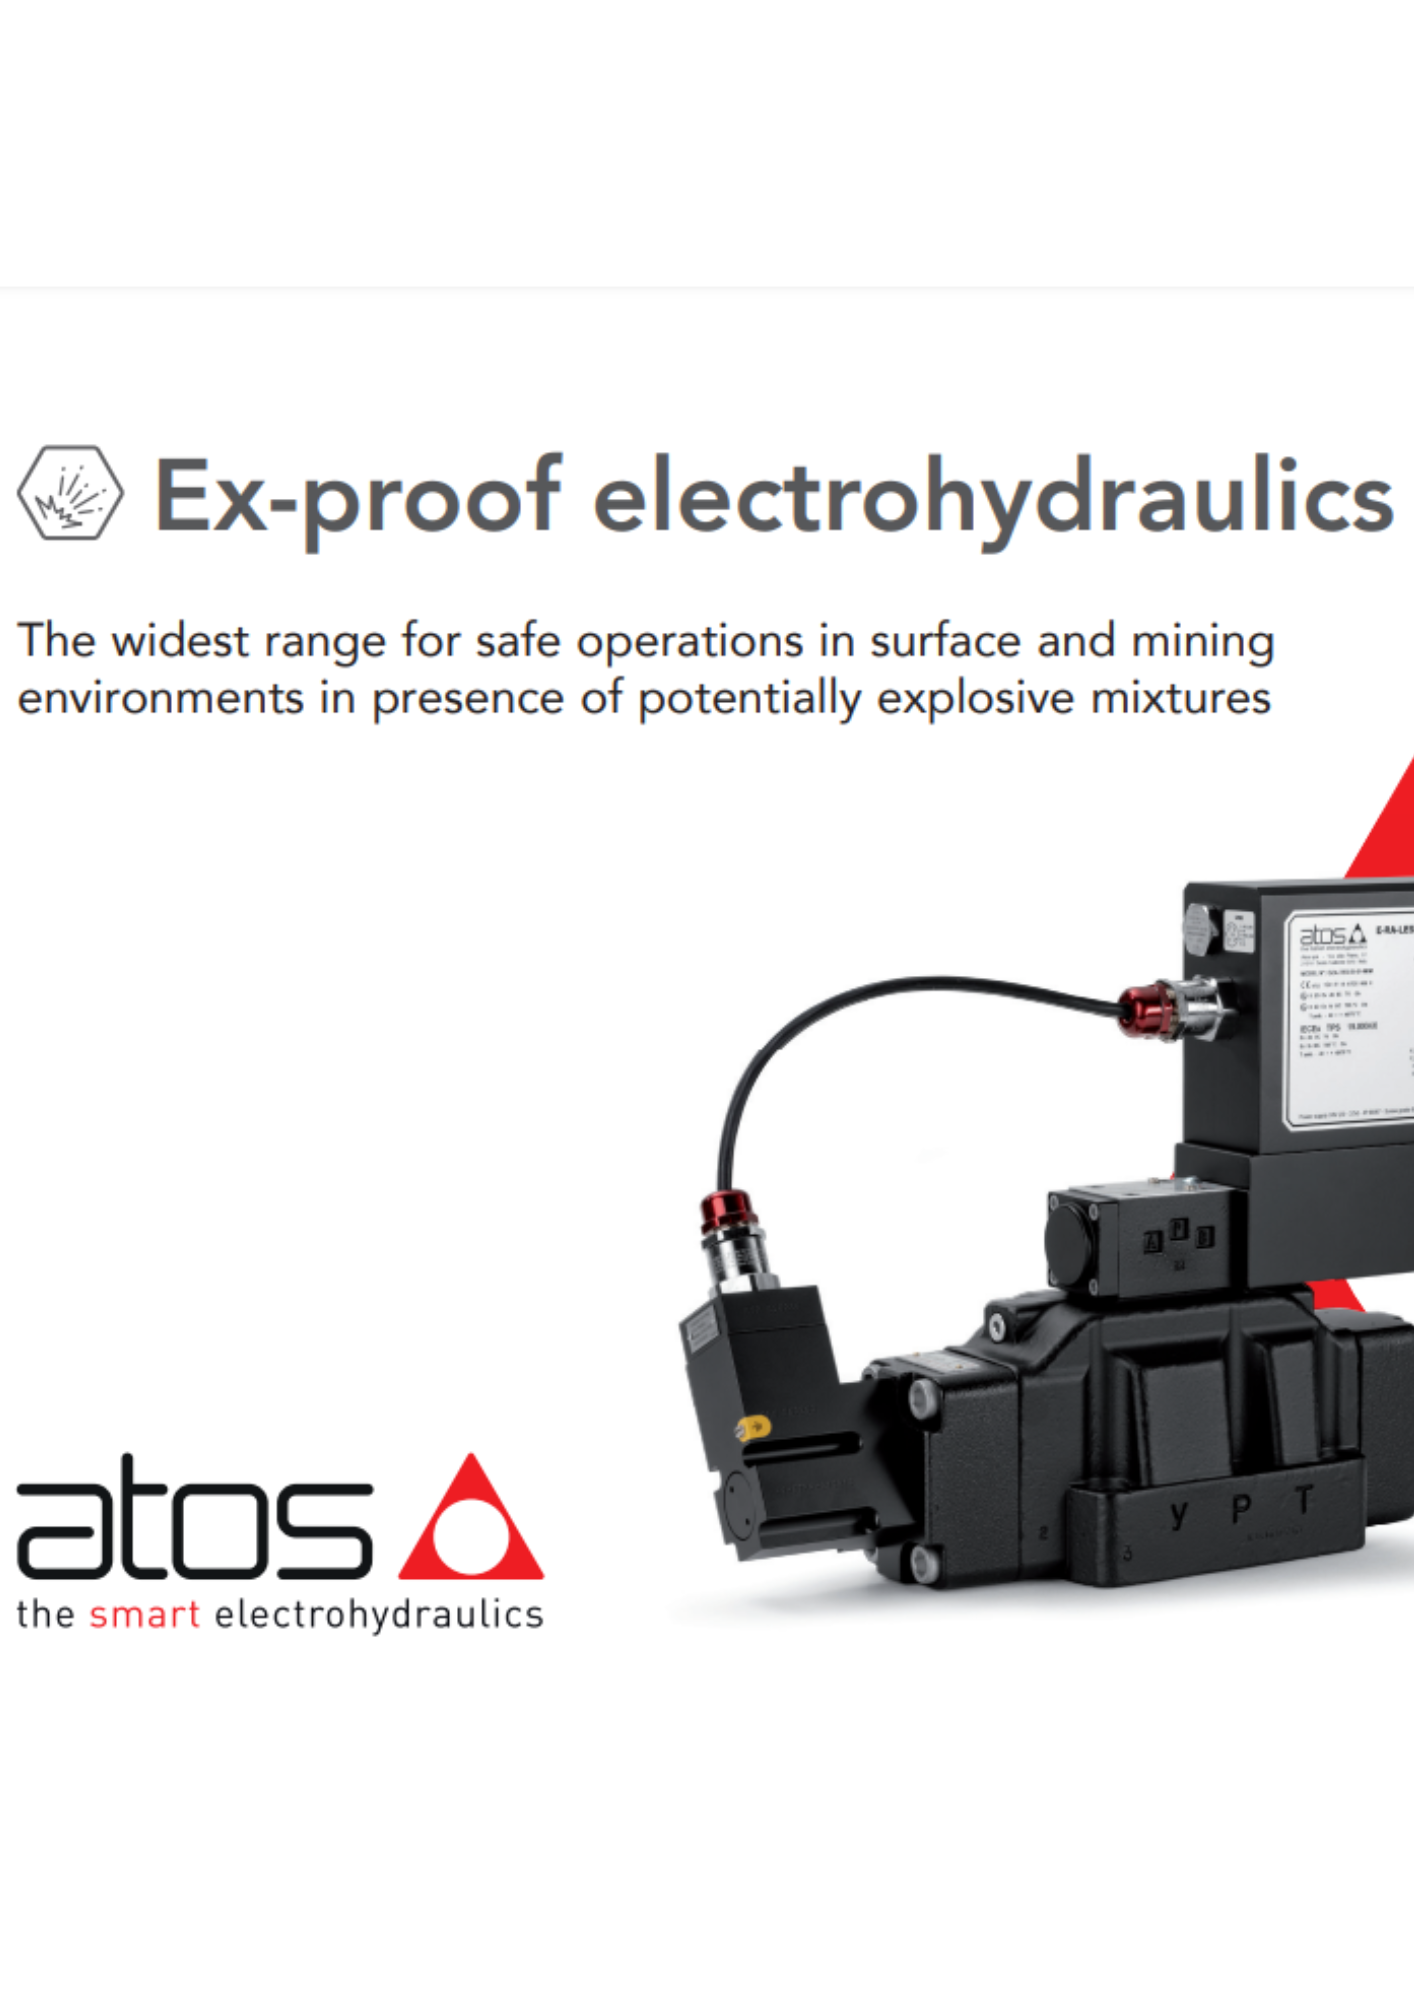 Atos: ex-proof electrohydraulics